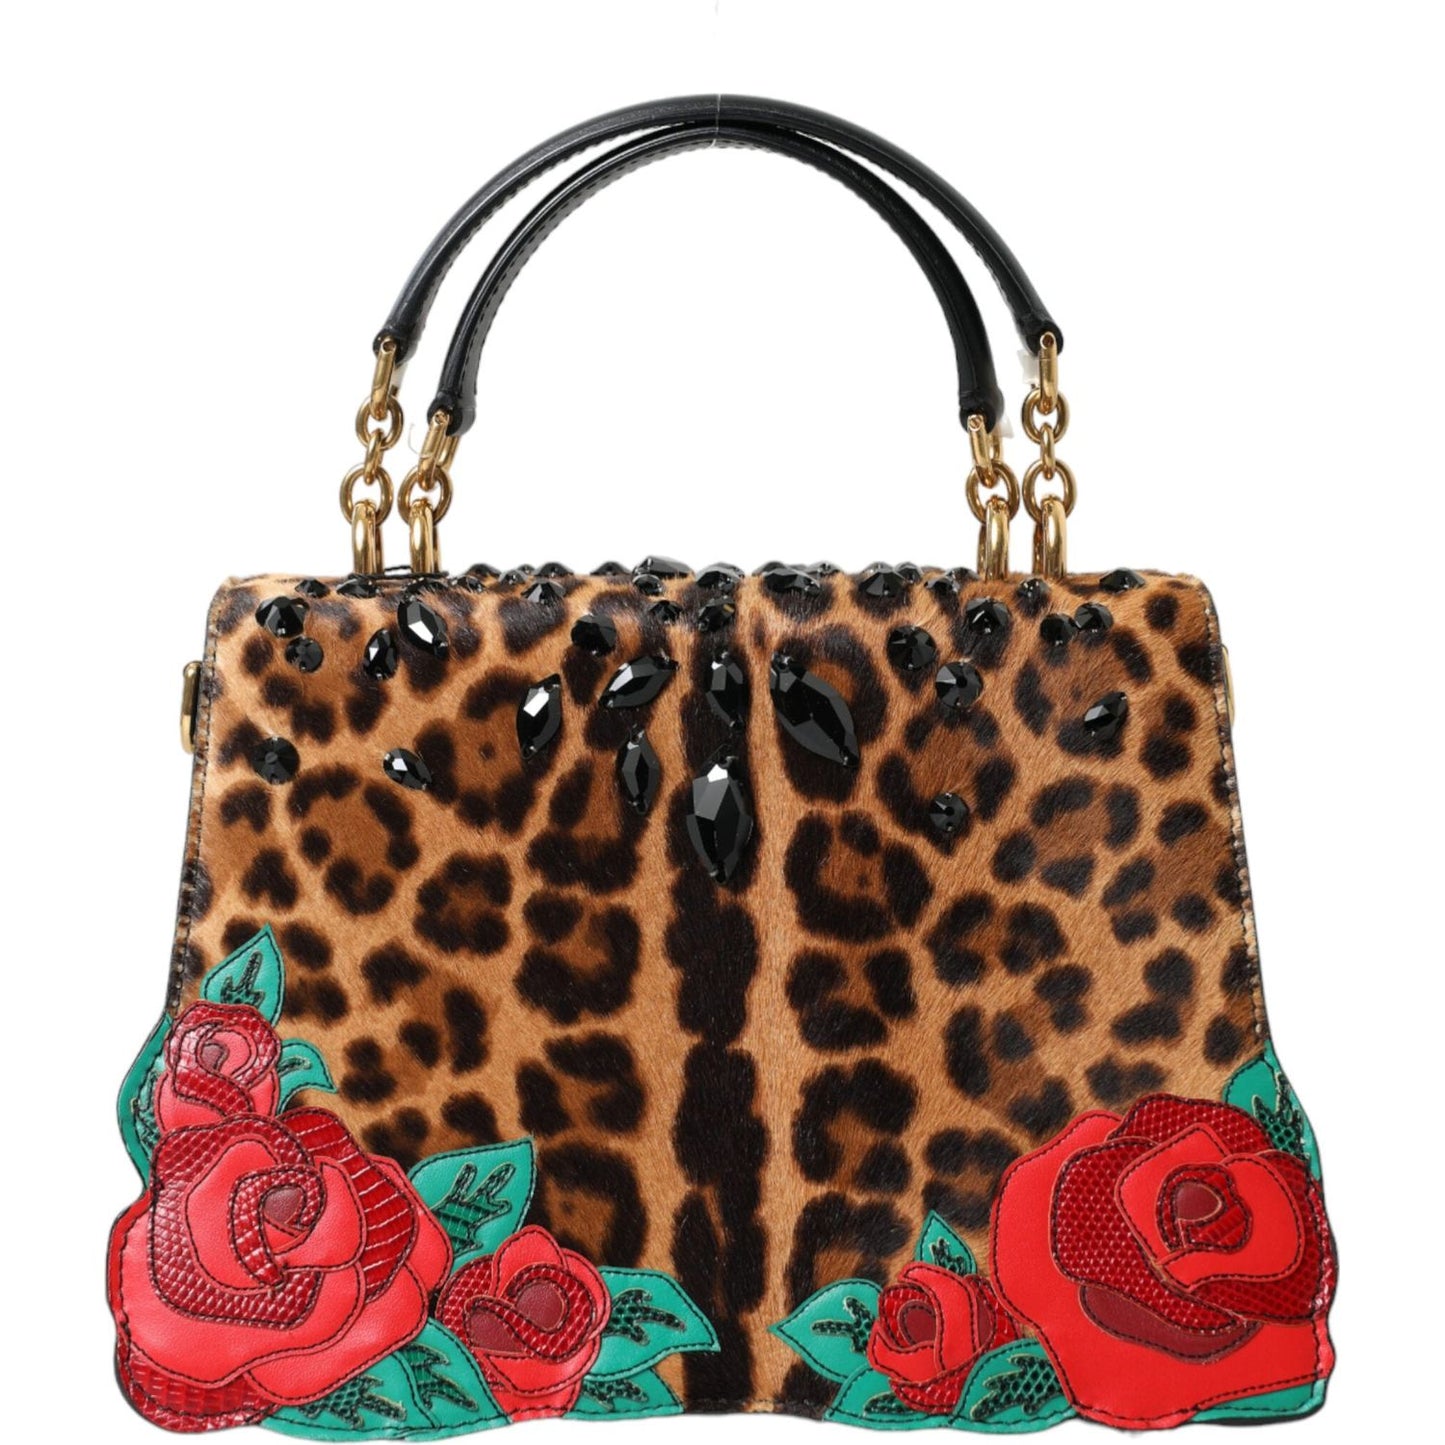 Dolce & Gabbana Chic Leopard Embellished Tote with Red Roses! chic-leopard-embellished-tote-with-red-roses